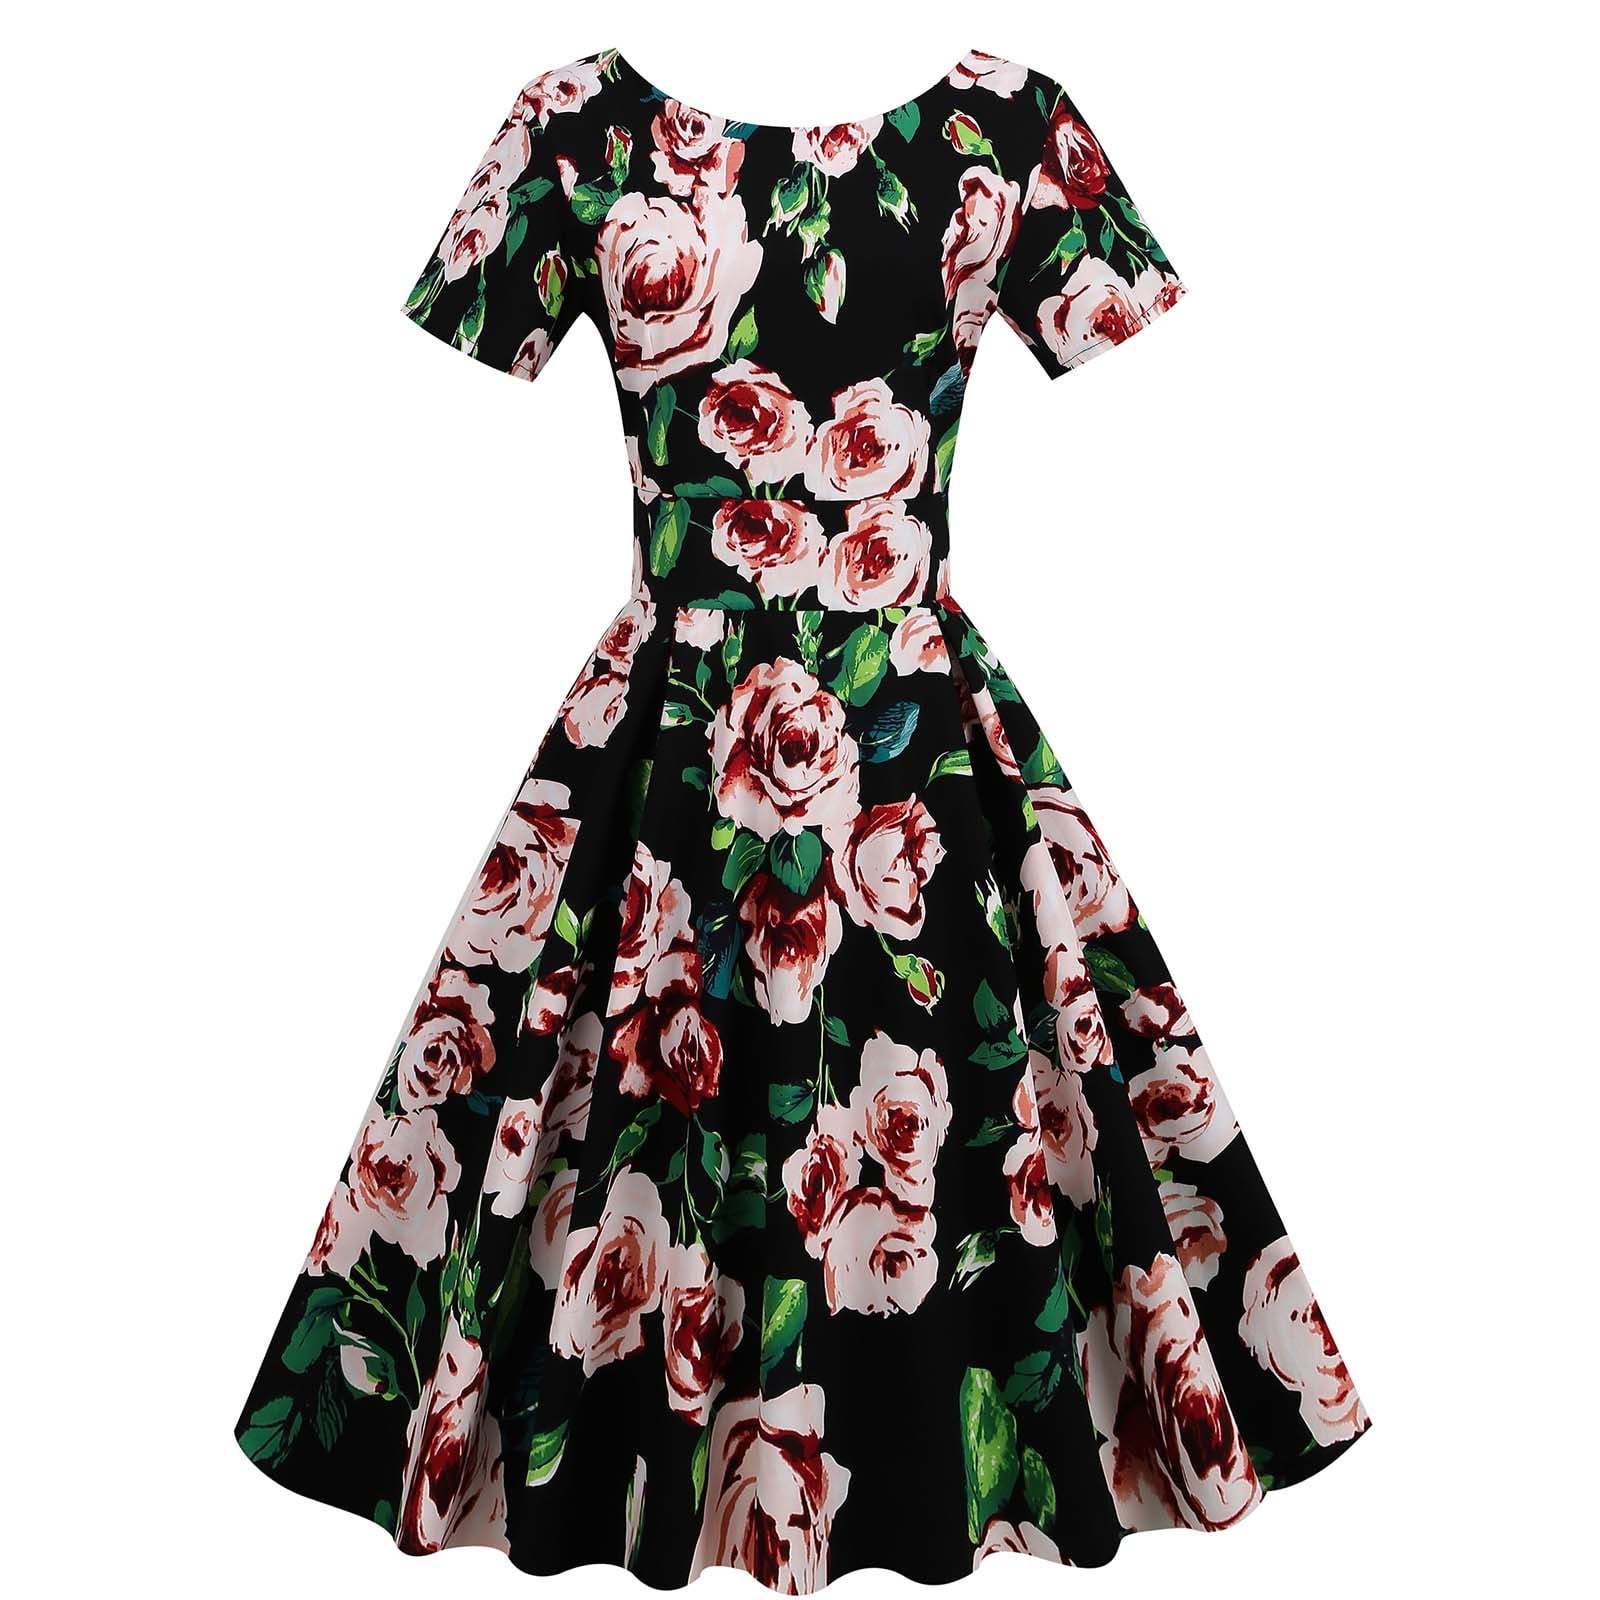 Floral Print Vintage Party Dress for Women, Summer Short Sleeve Audrey ...